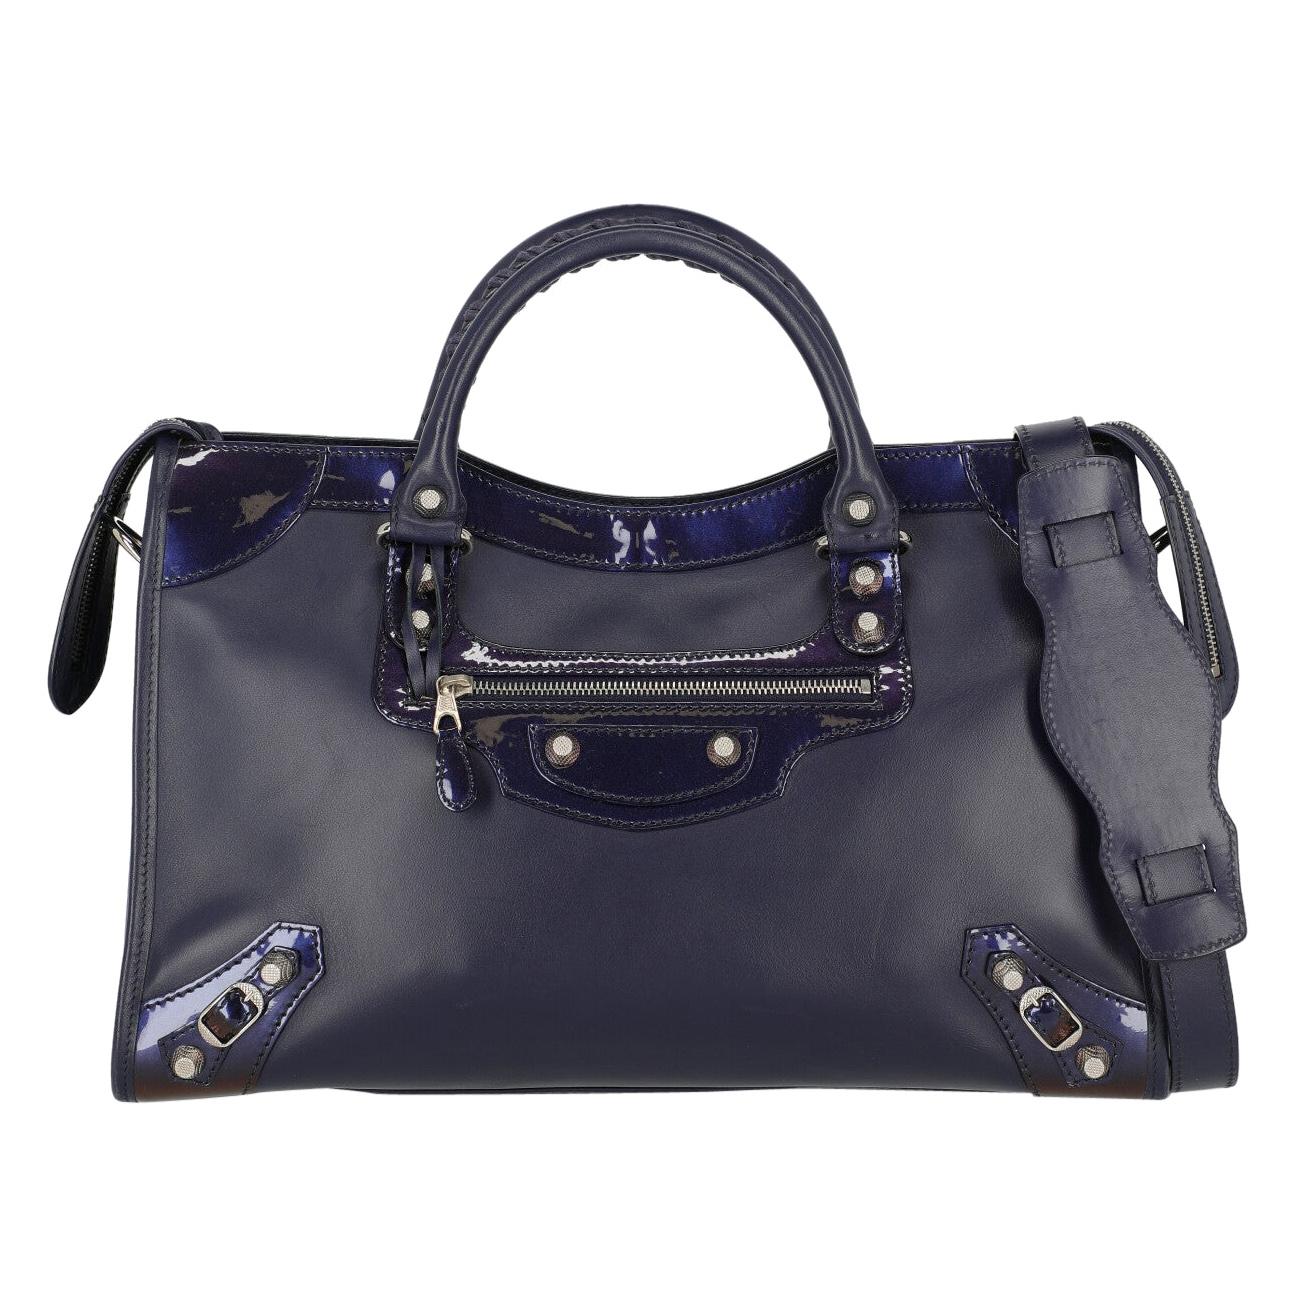 Balenciaga Woman Handbag City Navy Leather For Sale